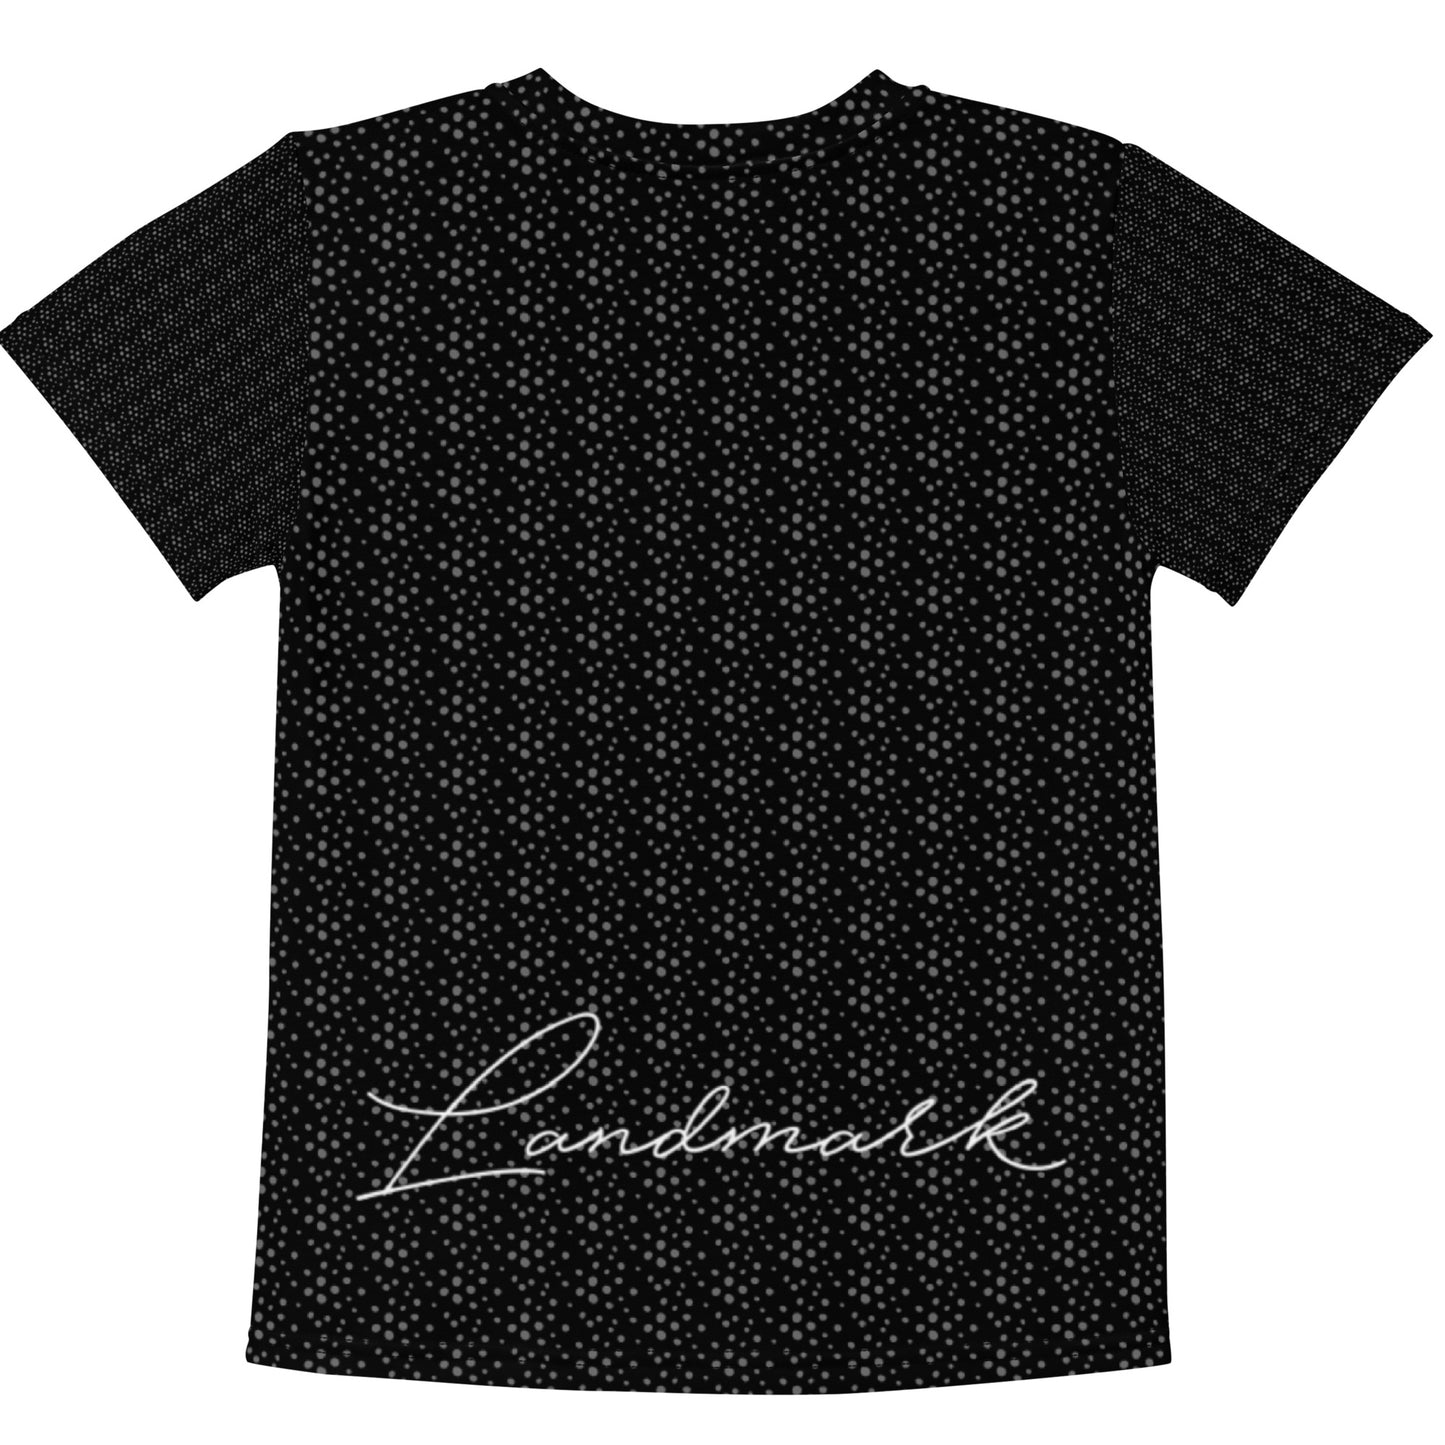 Landmark Youth Crew Neck T-Shirt